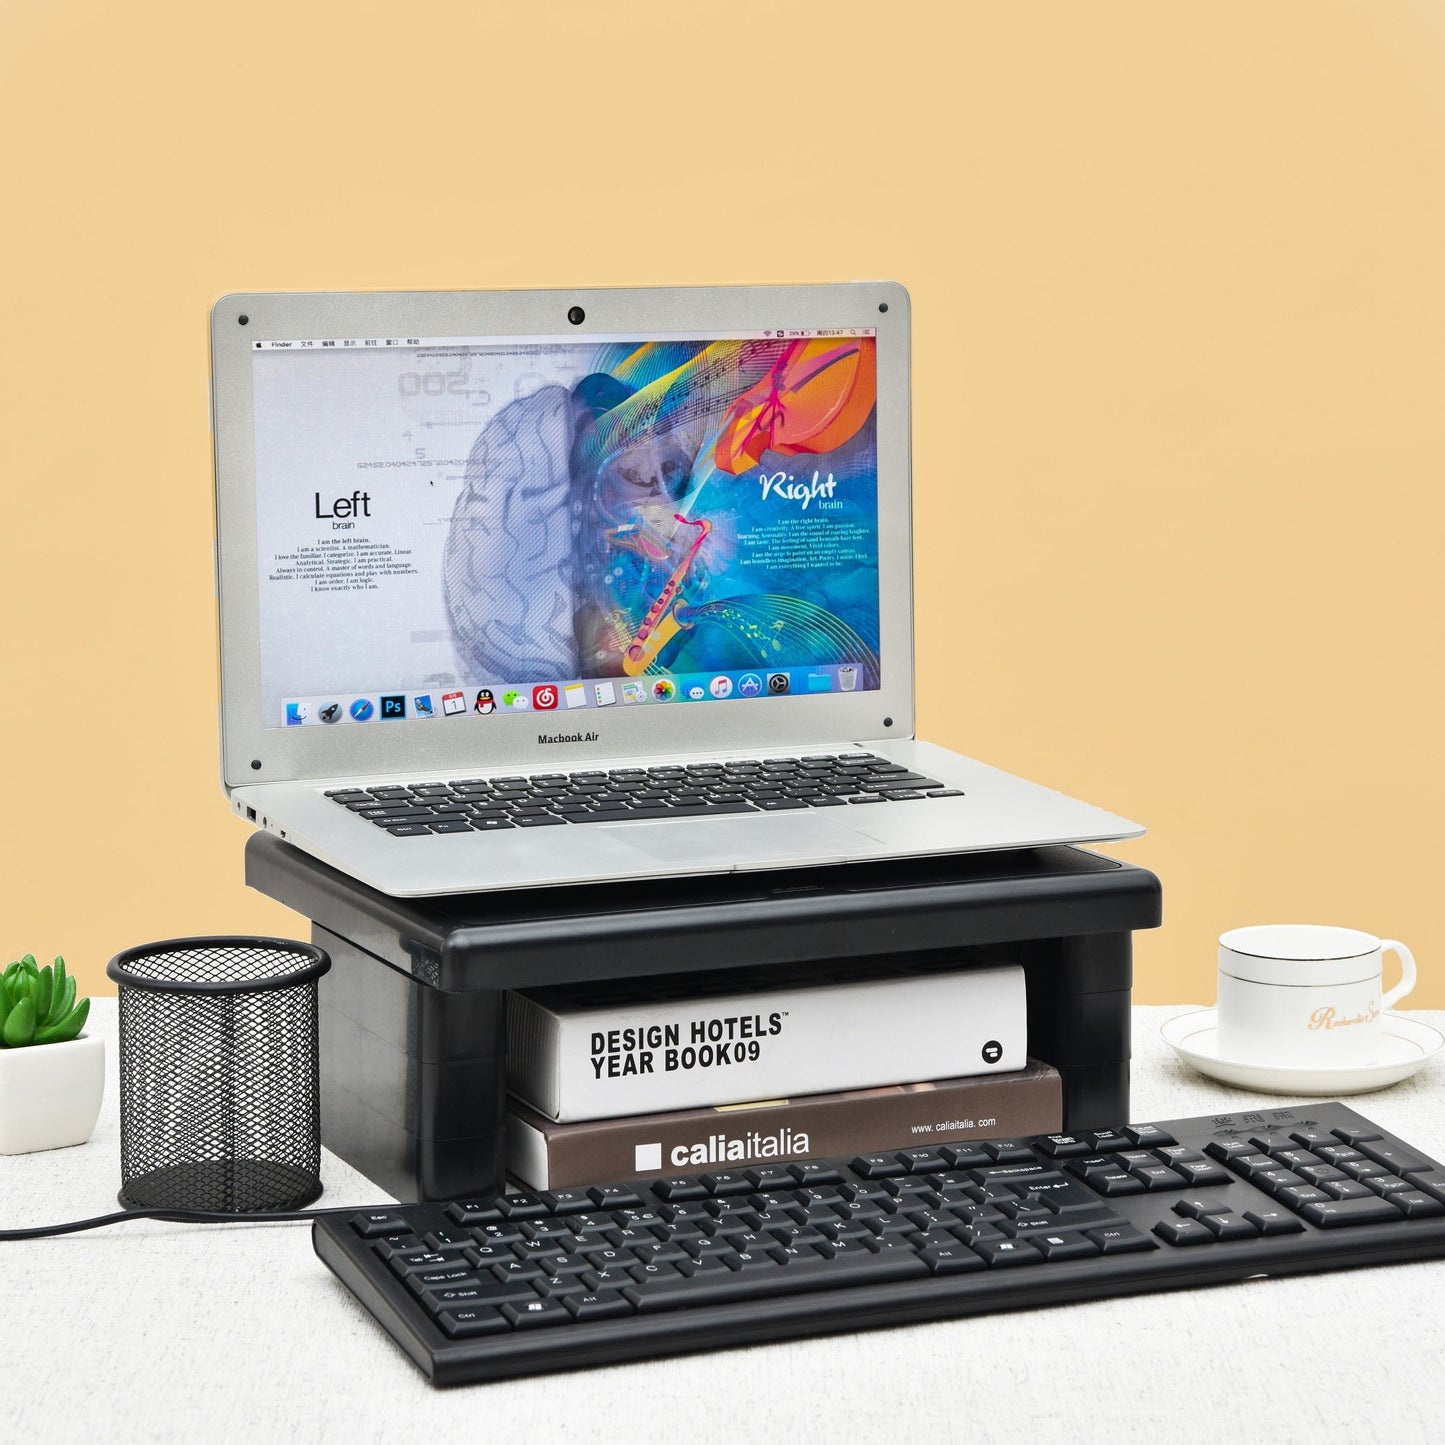 DAC® Stax MP-107x2 Ergonomic Height-Adjustable Monitor Riser/Laptop Stand, Black, 2 Pack